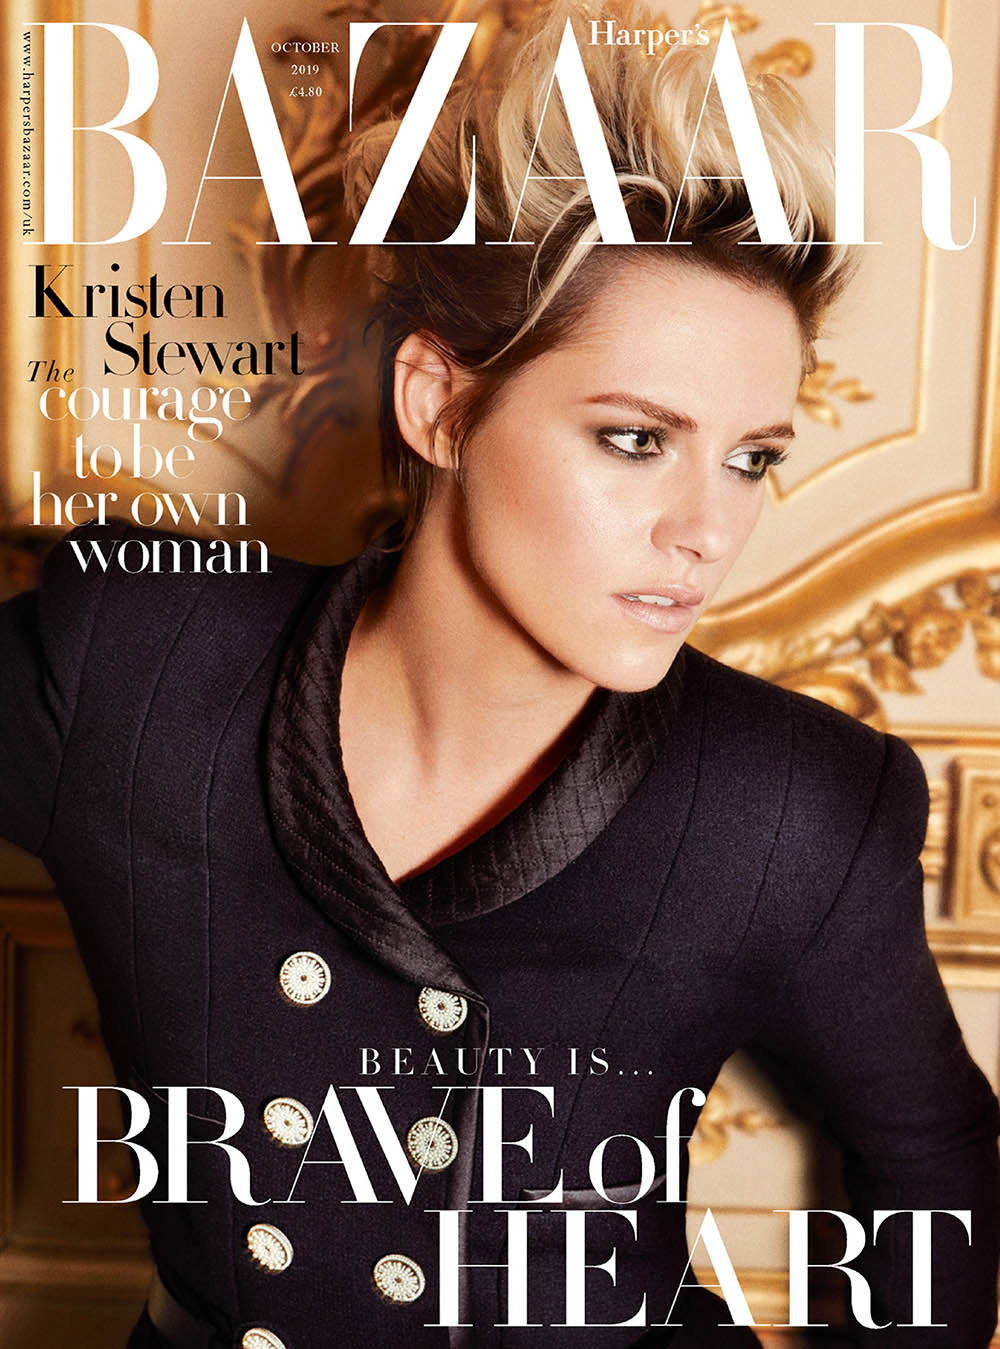 Kristen Stewart covers Harper’s Bazaar UK October 2019 by Alexi Lubomirski